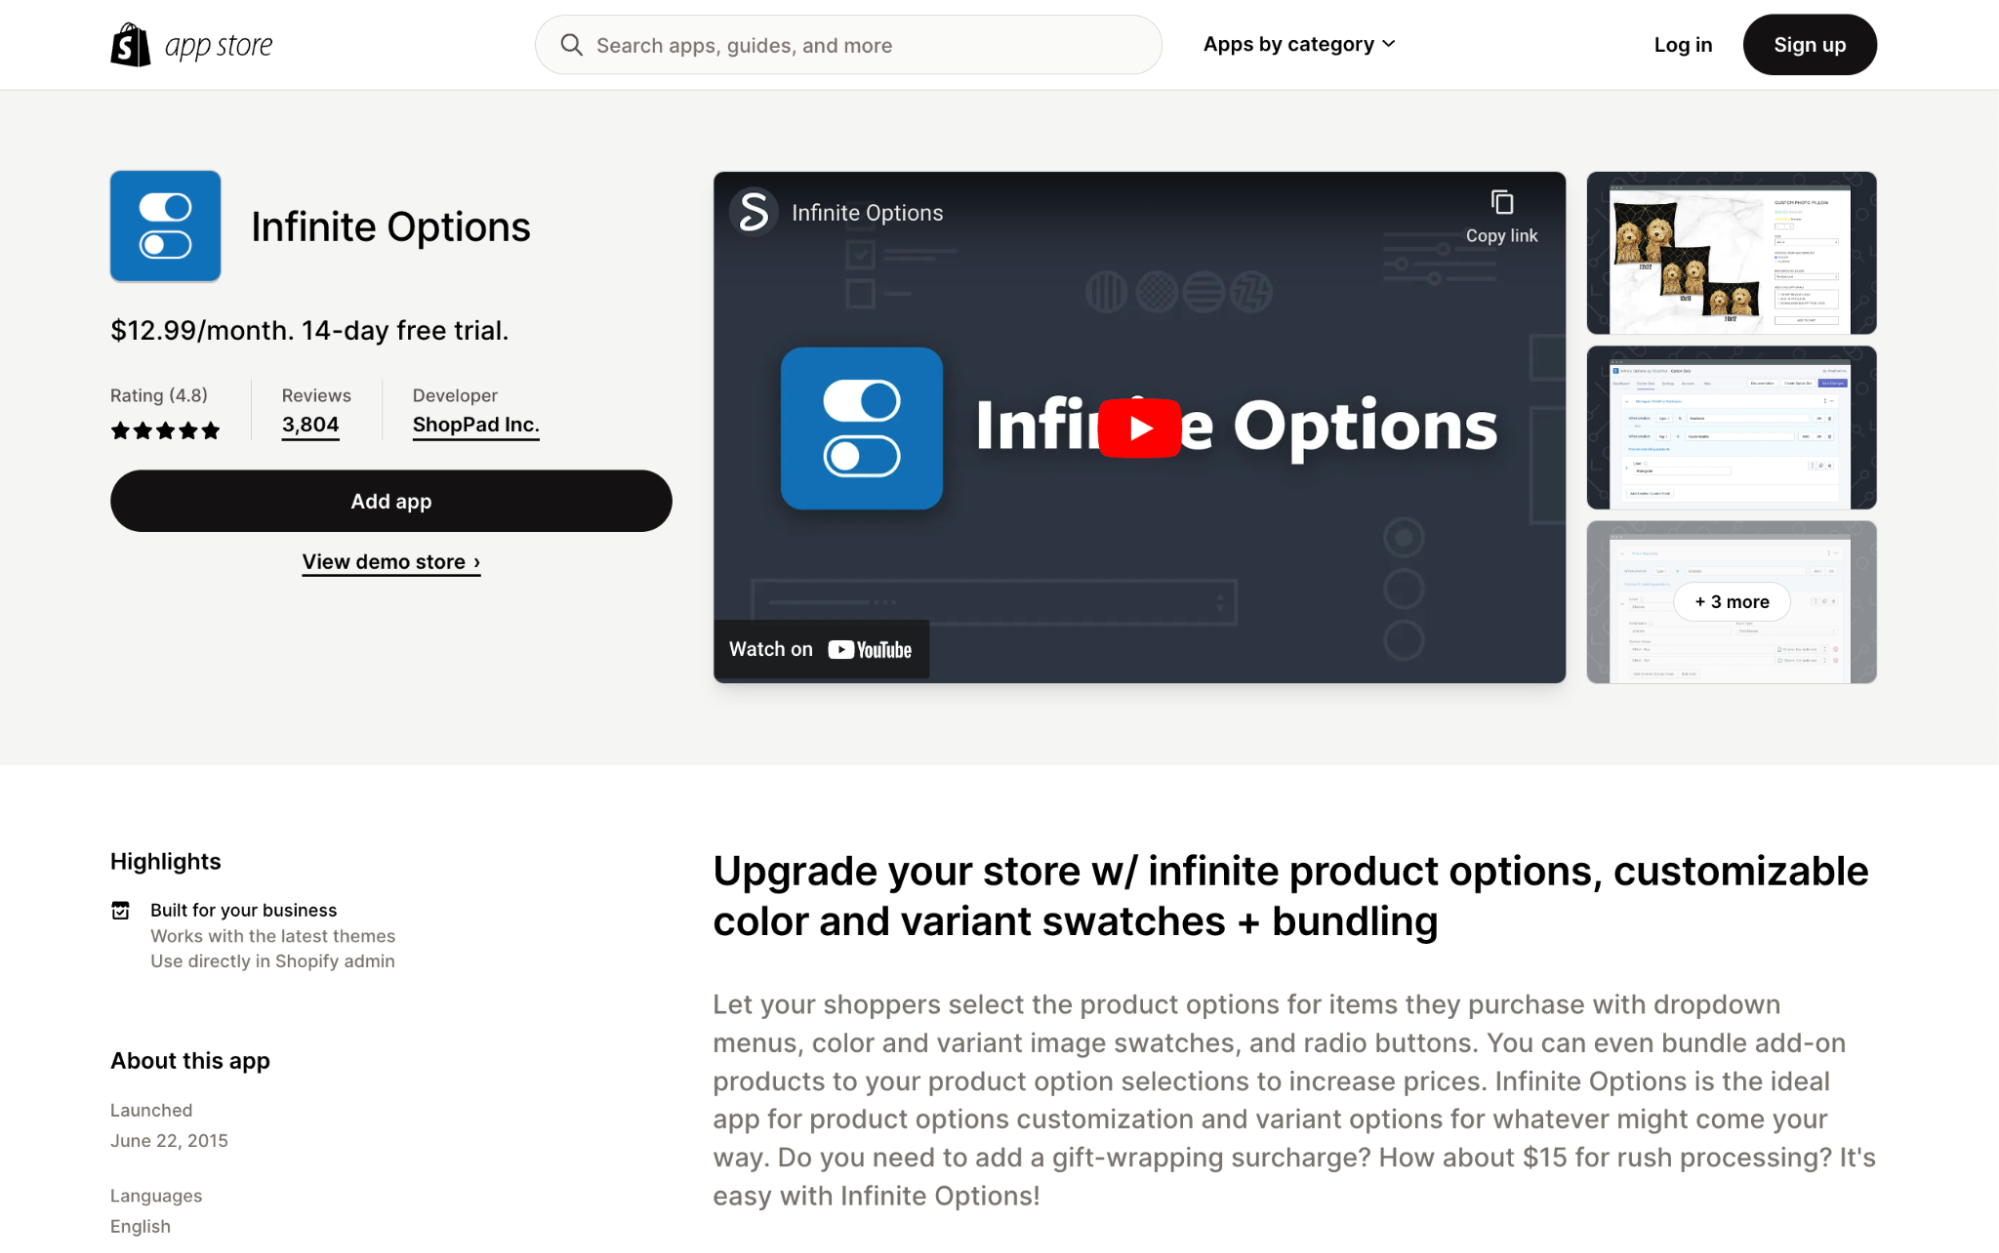 App Store: Infinite Options by ShopPad